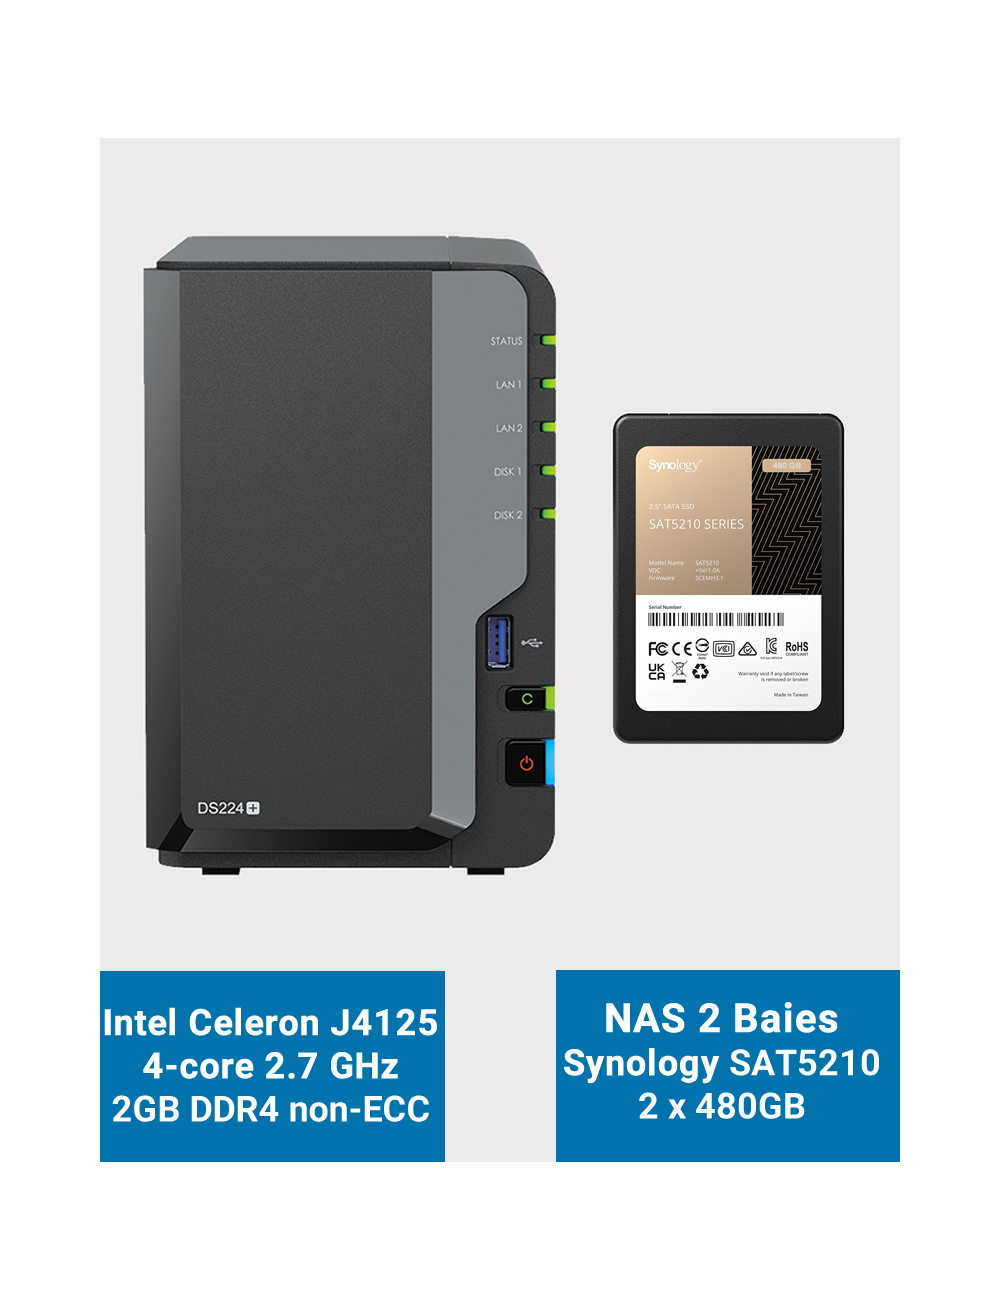 Synology DiskStation DS224+ 2Go Serveur NAS SAT5210 960Go (2x480Go)